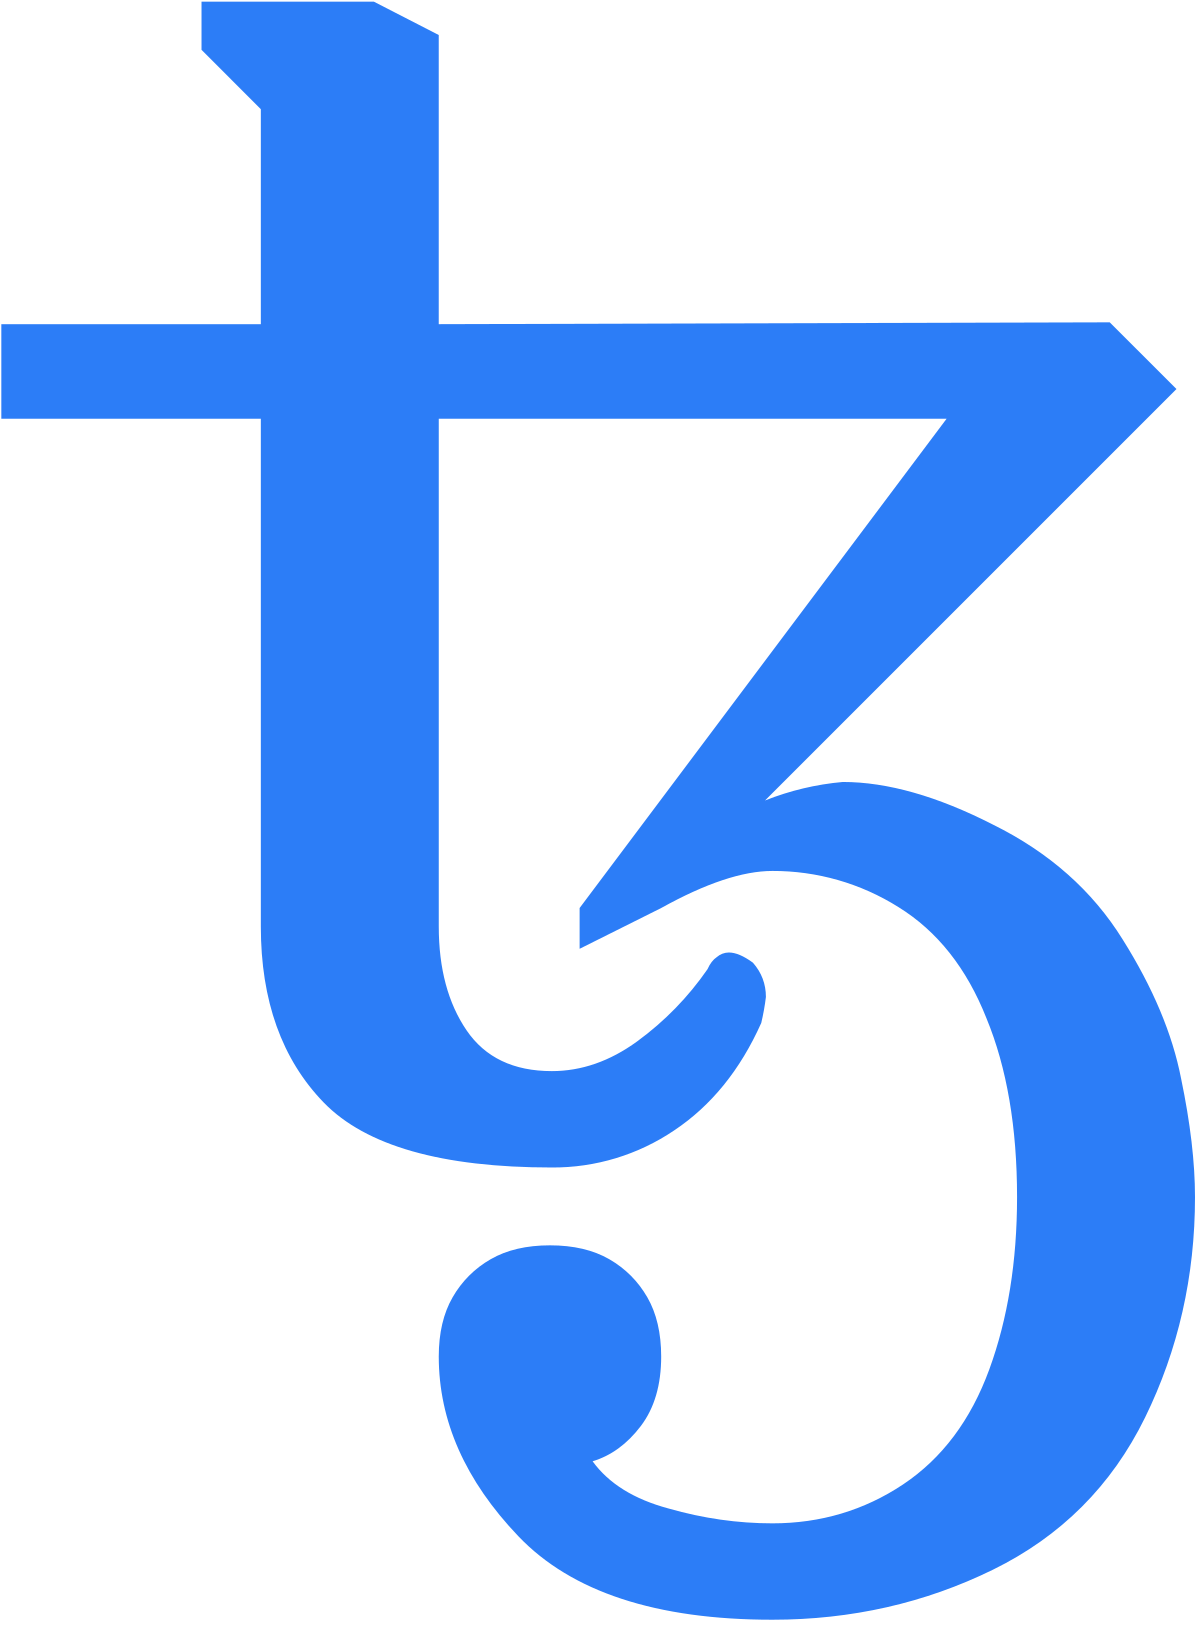 Dosya:Tezos logo.svg - Wikimedia Commons